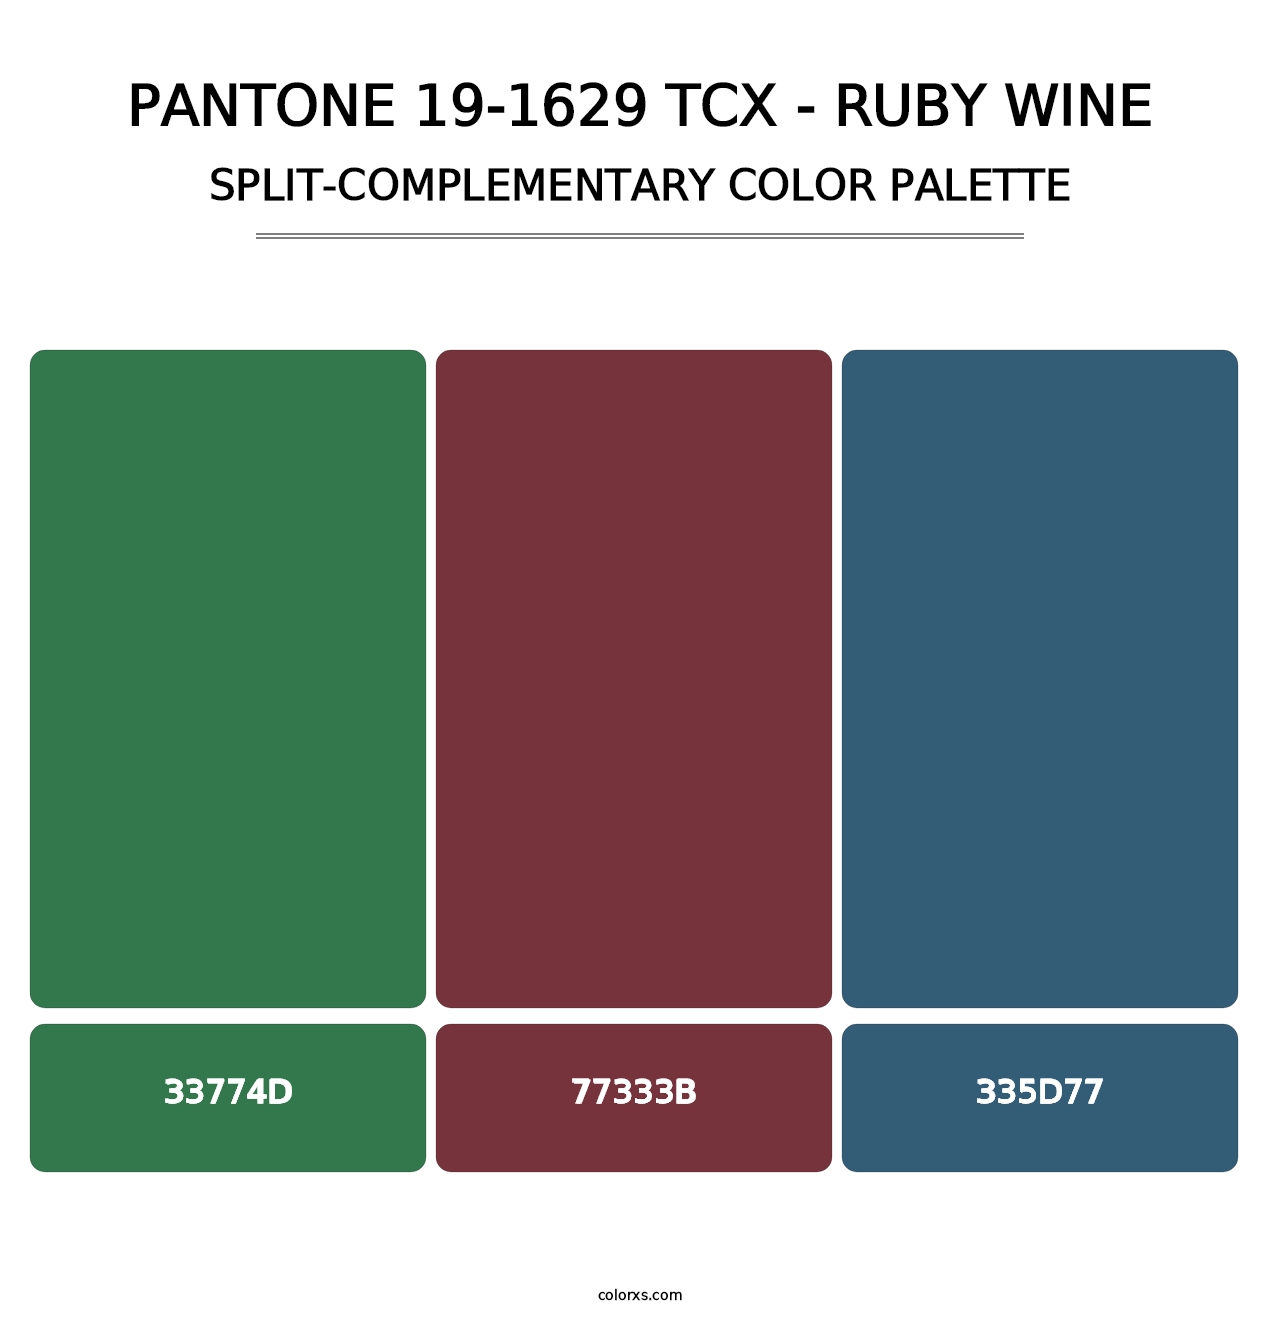 PANTONE 19-1629 TCX - Ruby Wine - Split-Complementary Color Palette